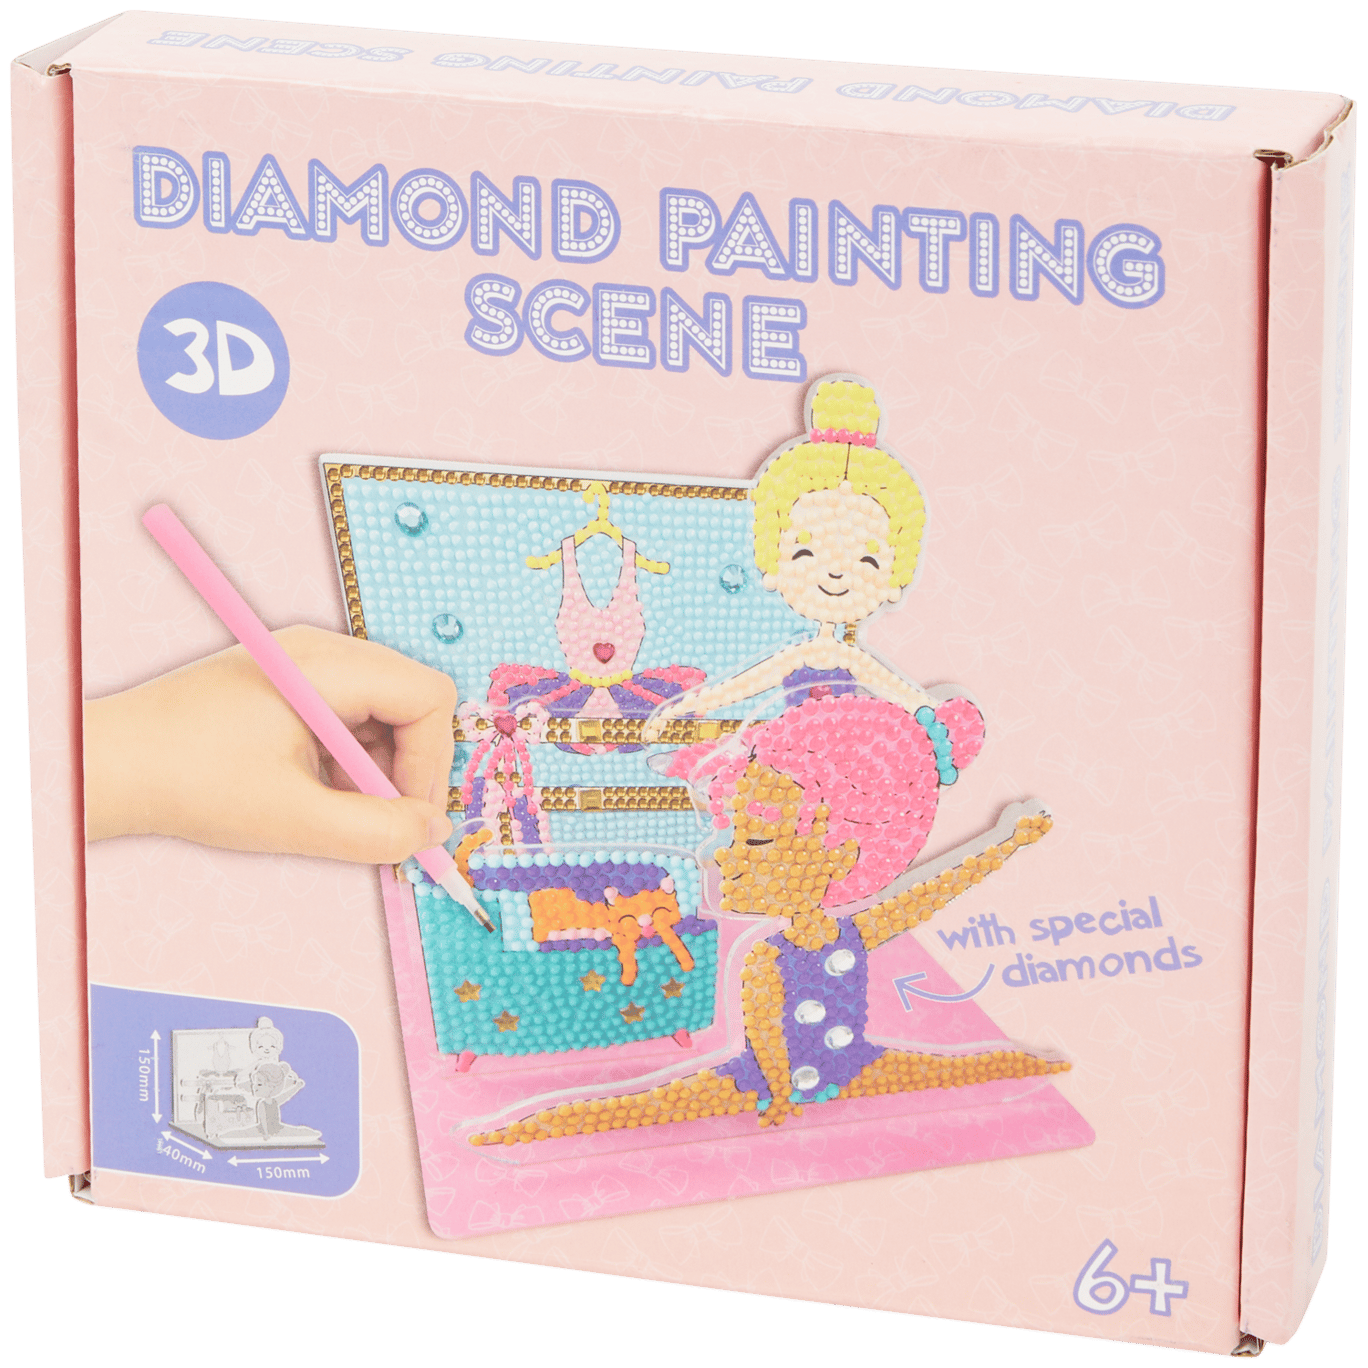 Diamond painting scene